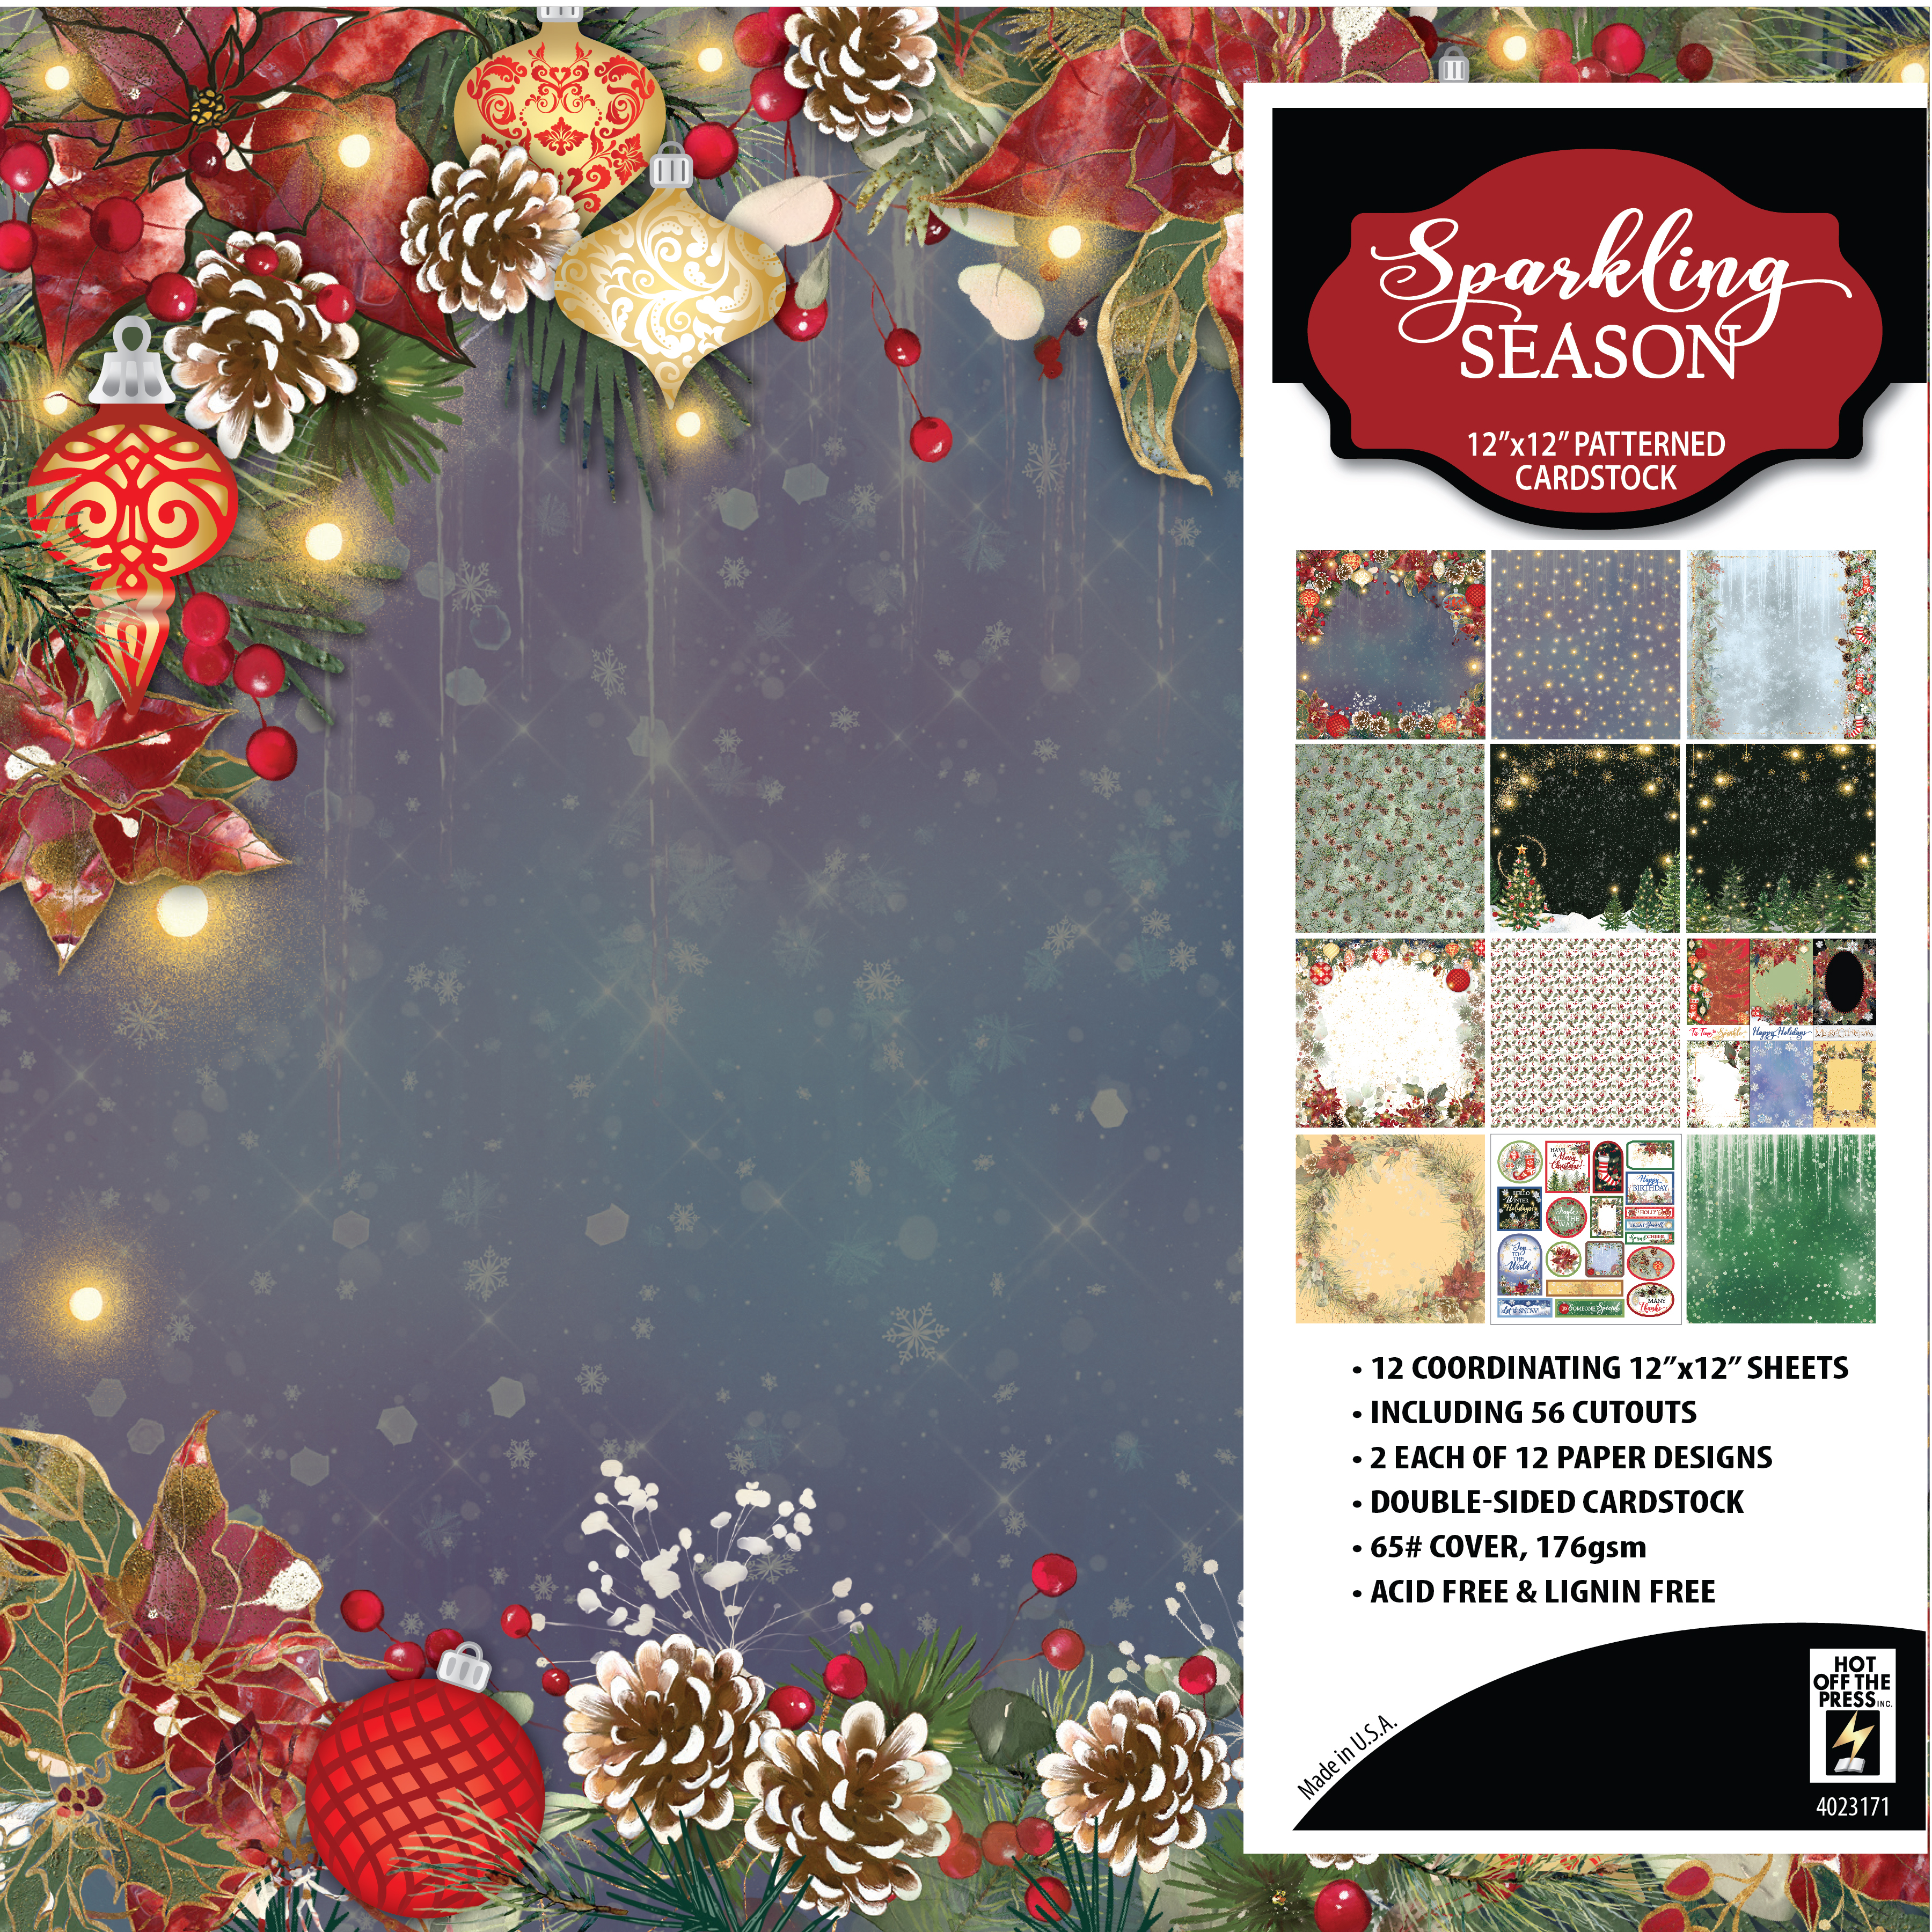 Sparkling Season 12x12 Patterned Cardstock